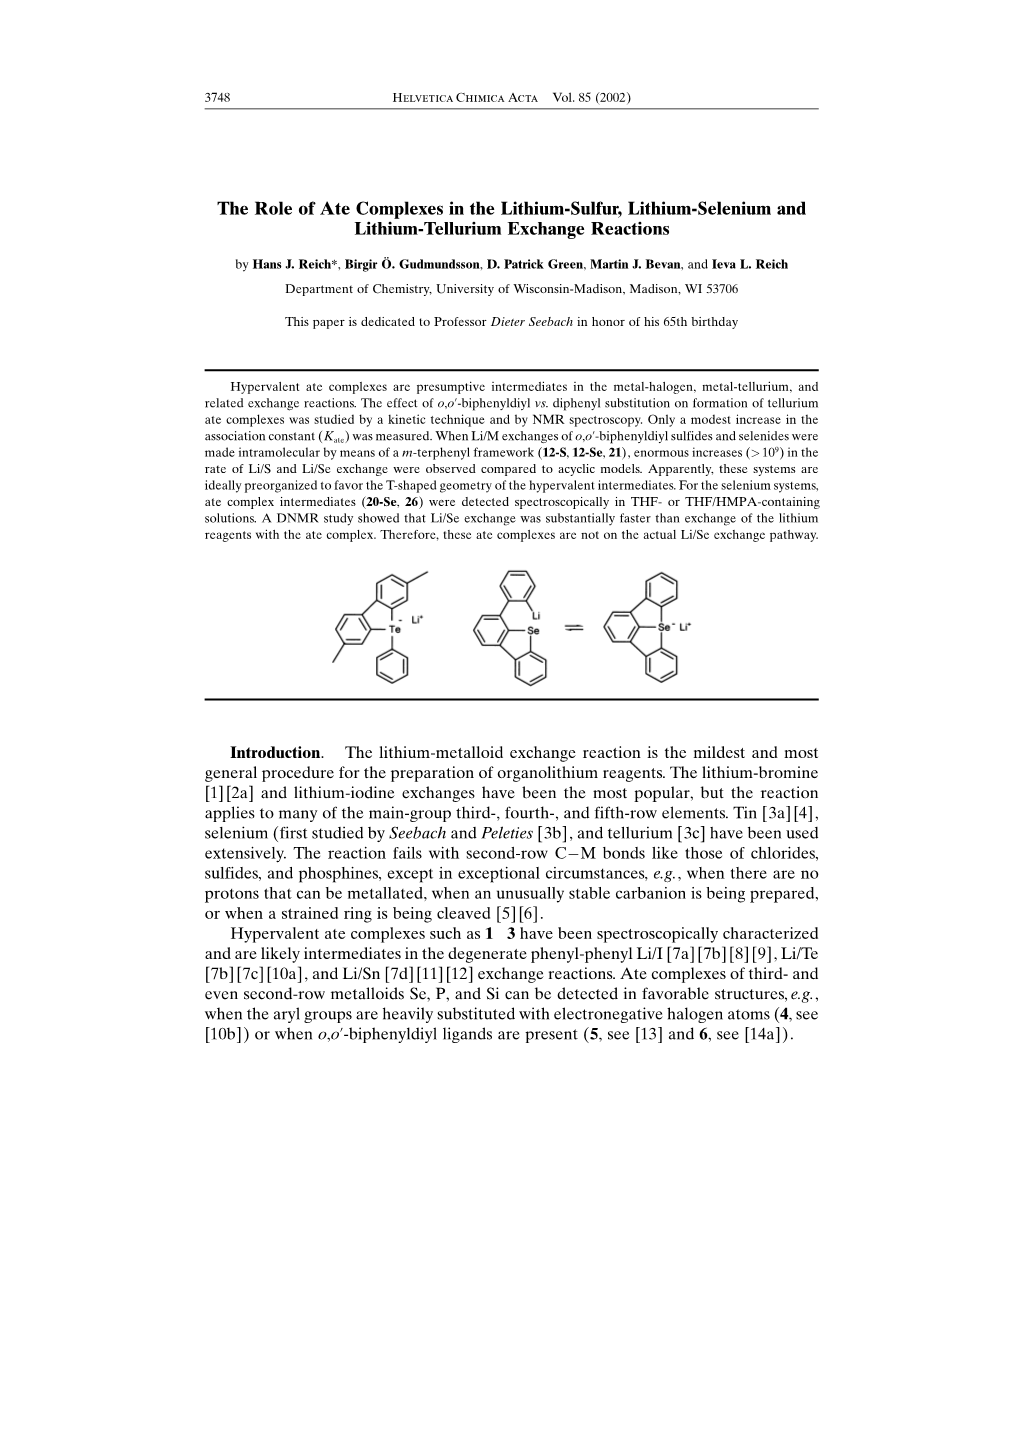 The Role of Ate Complexes in the Lithium-Sulfur, Lithium-Selenium and Lithium-Tellurium Exchange Reactions